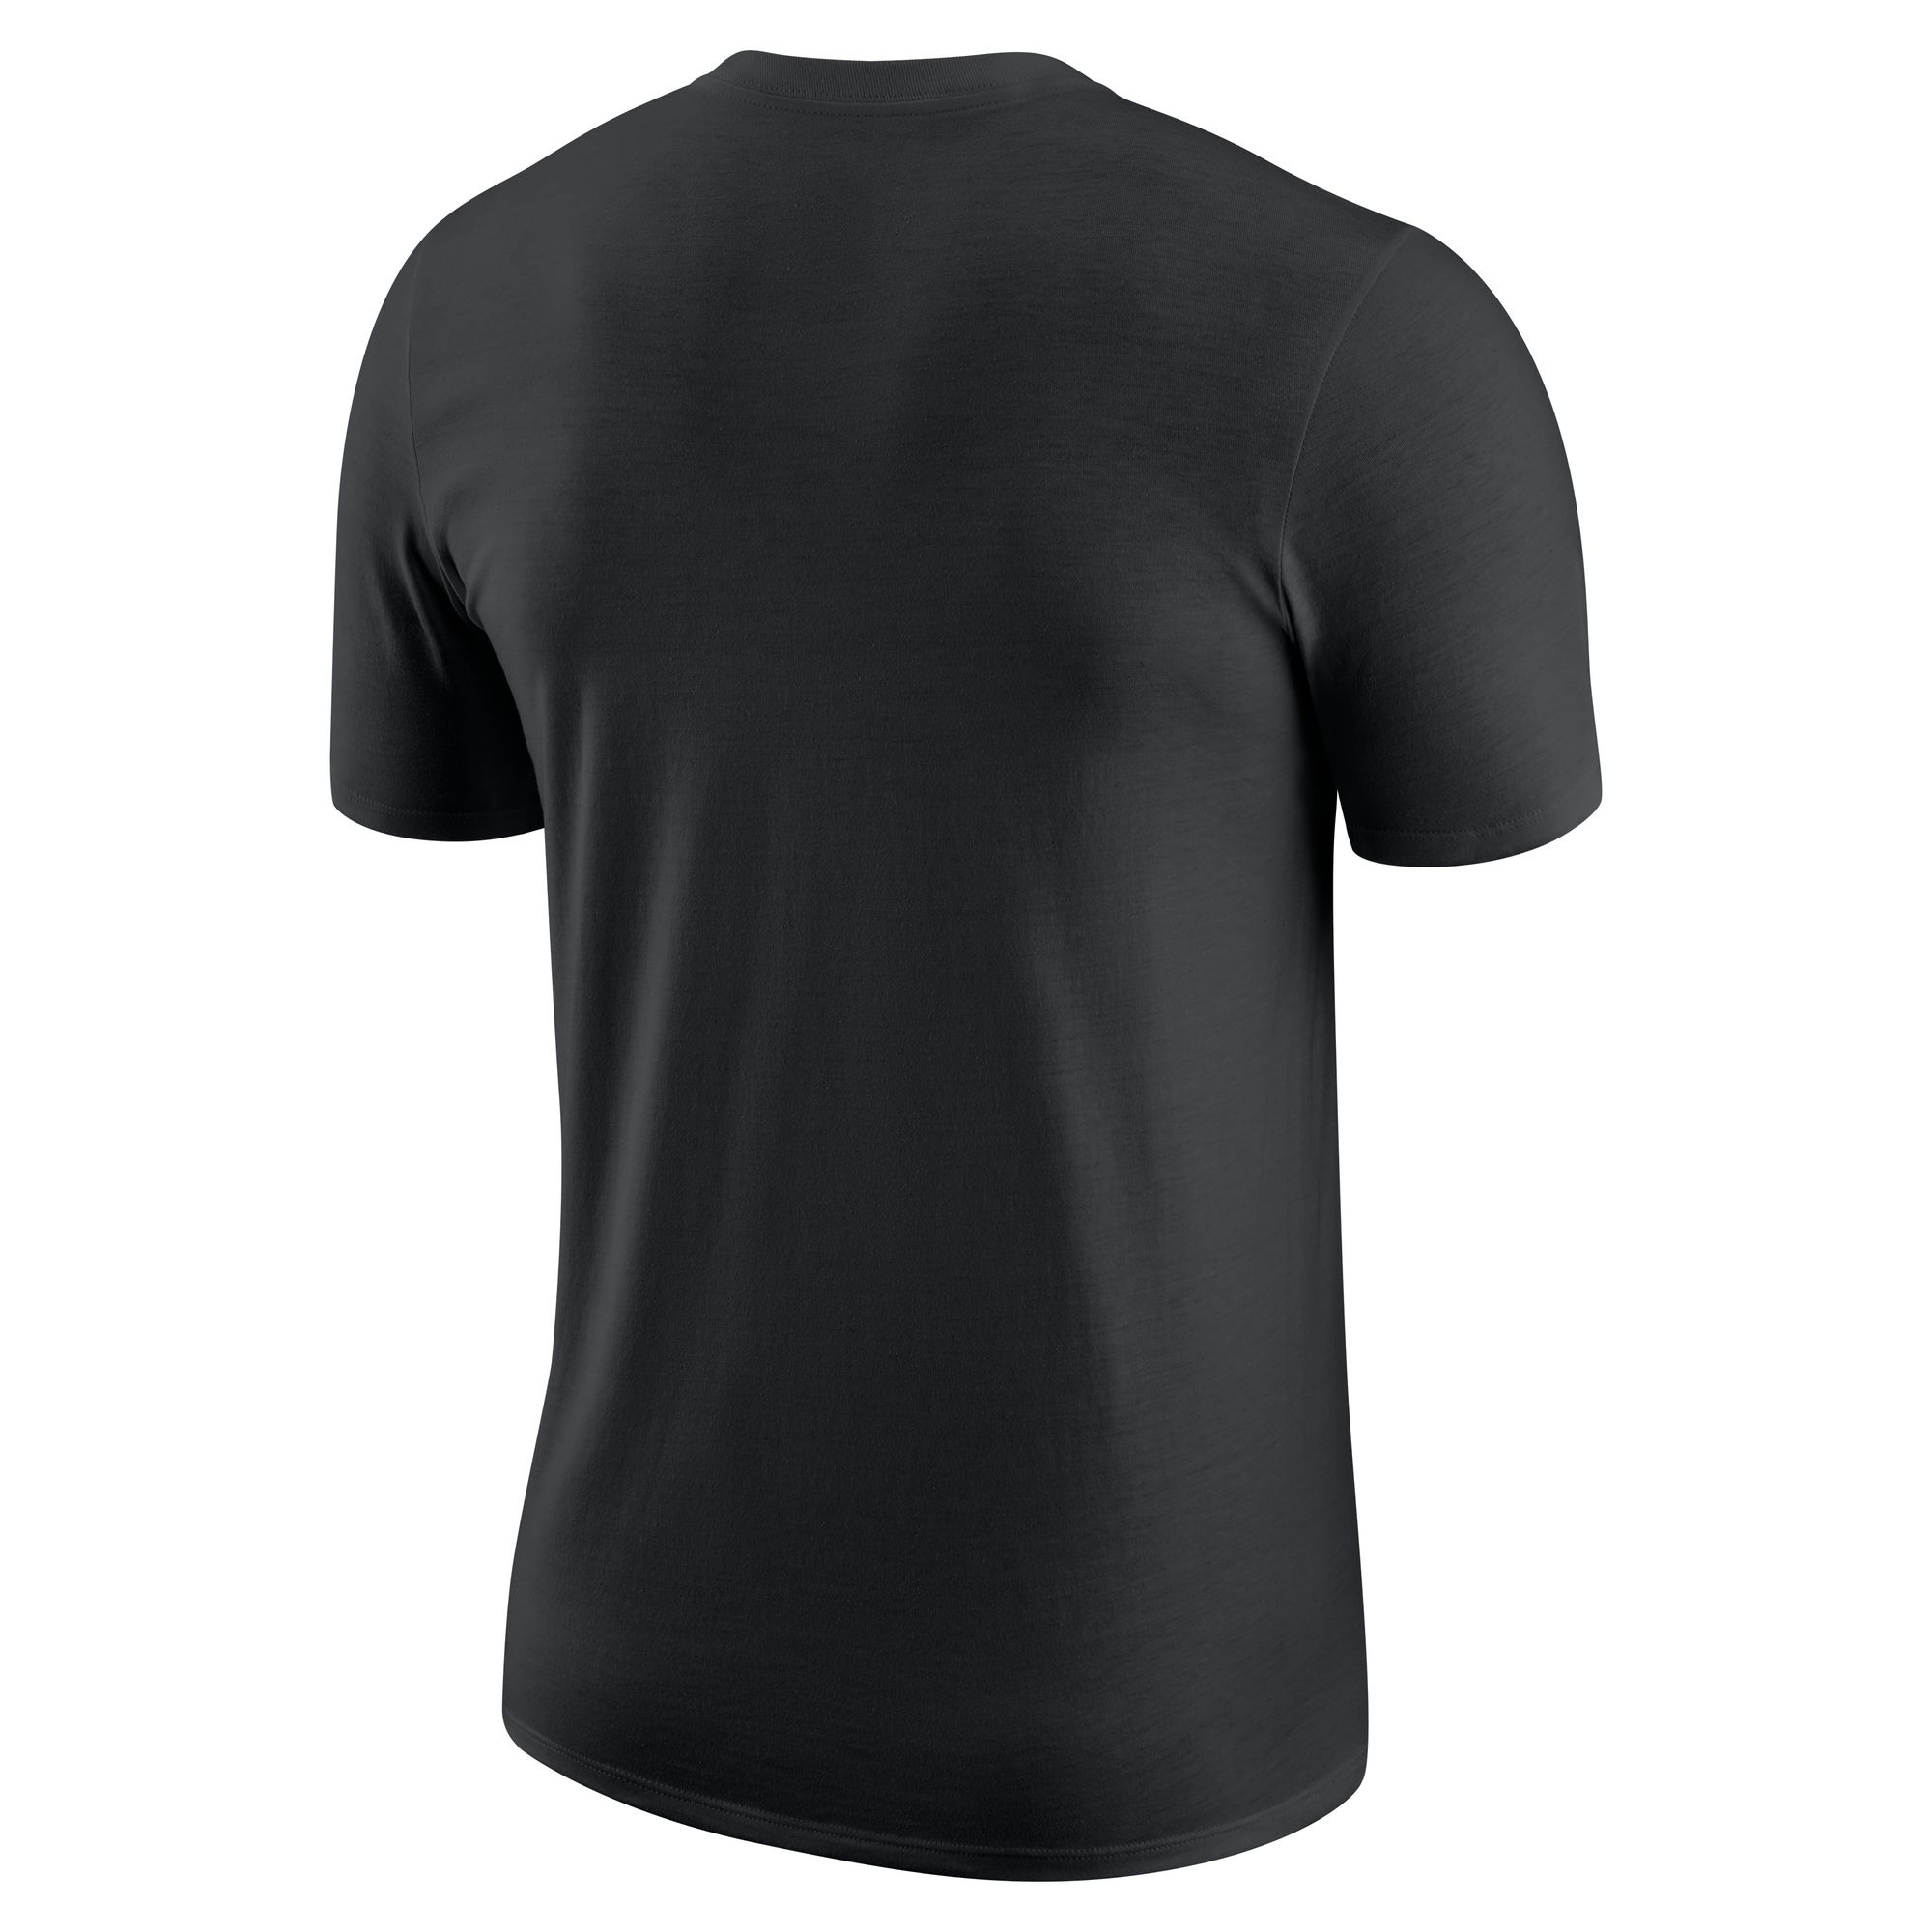 Nike Milwaukee Bucks Dri-FIT Practice Long Sleeve T-Shirt - White - MODA3